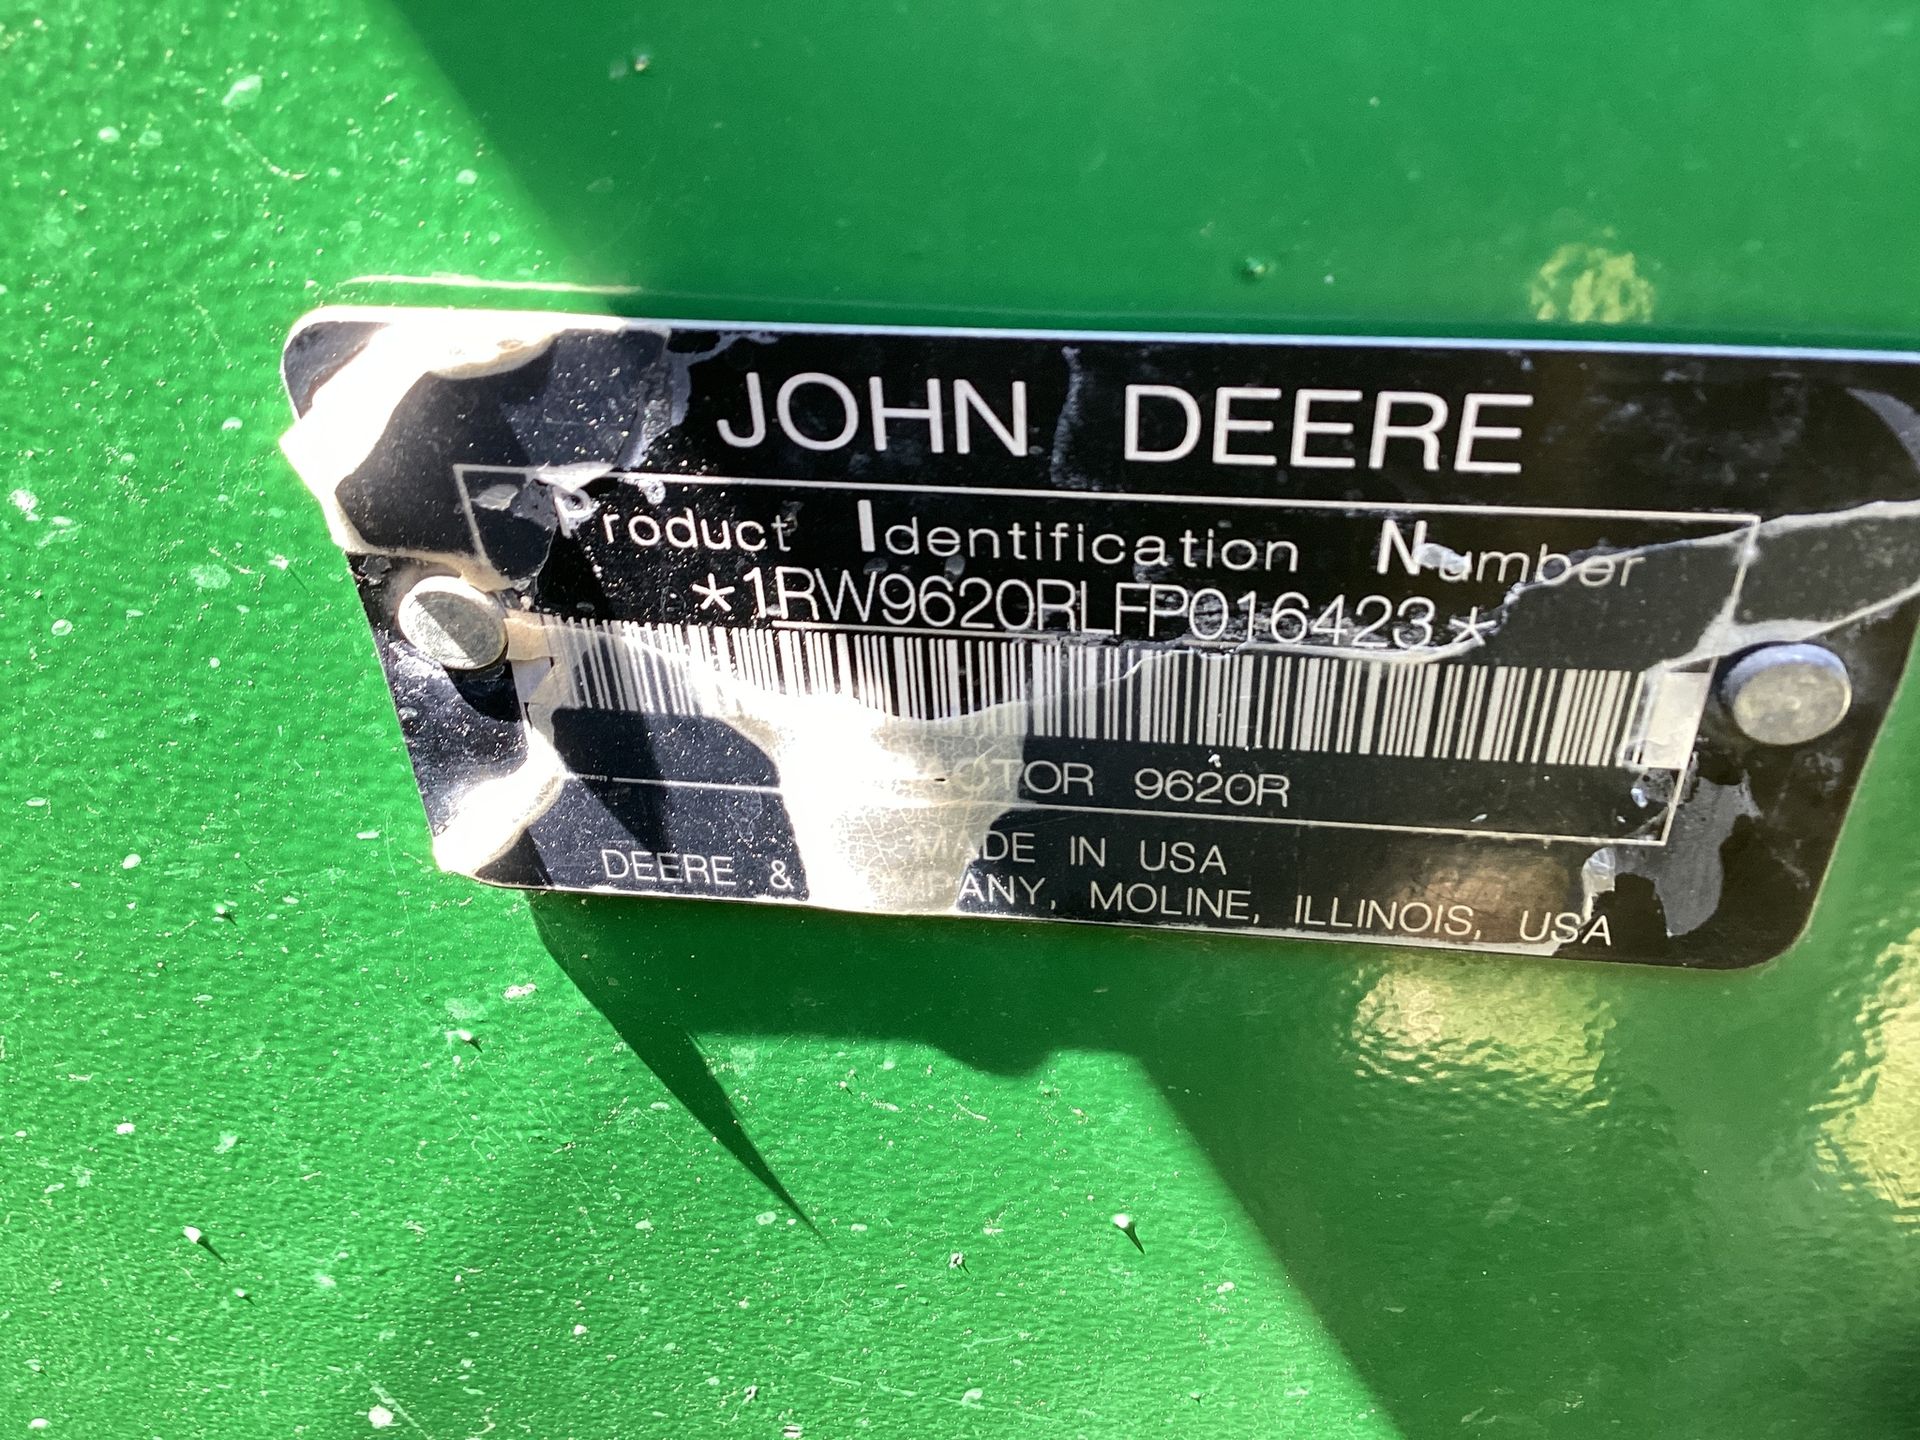 2015 John Deere 9620R